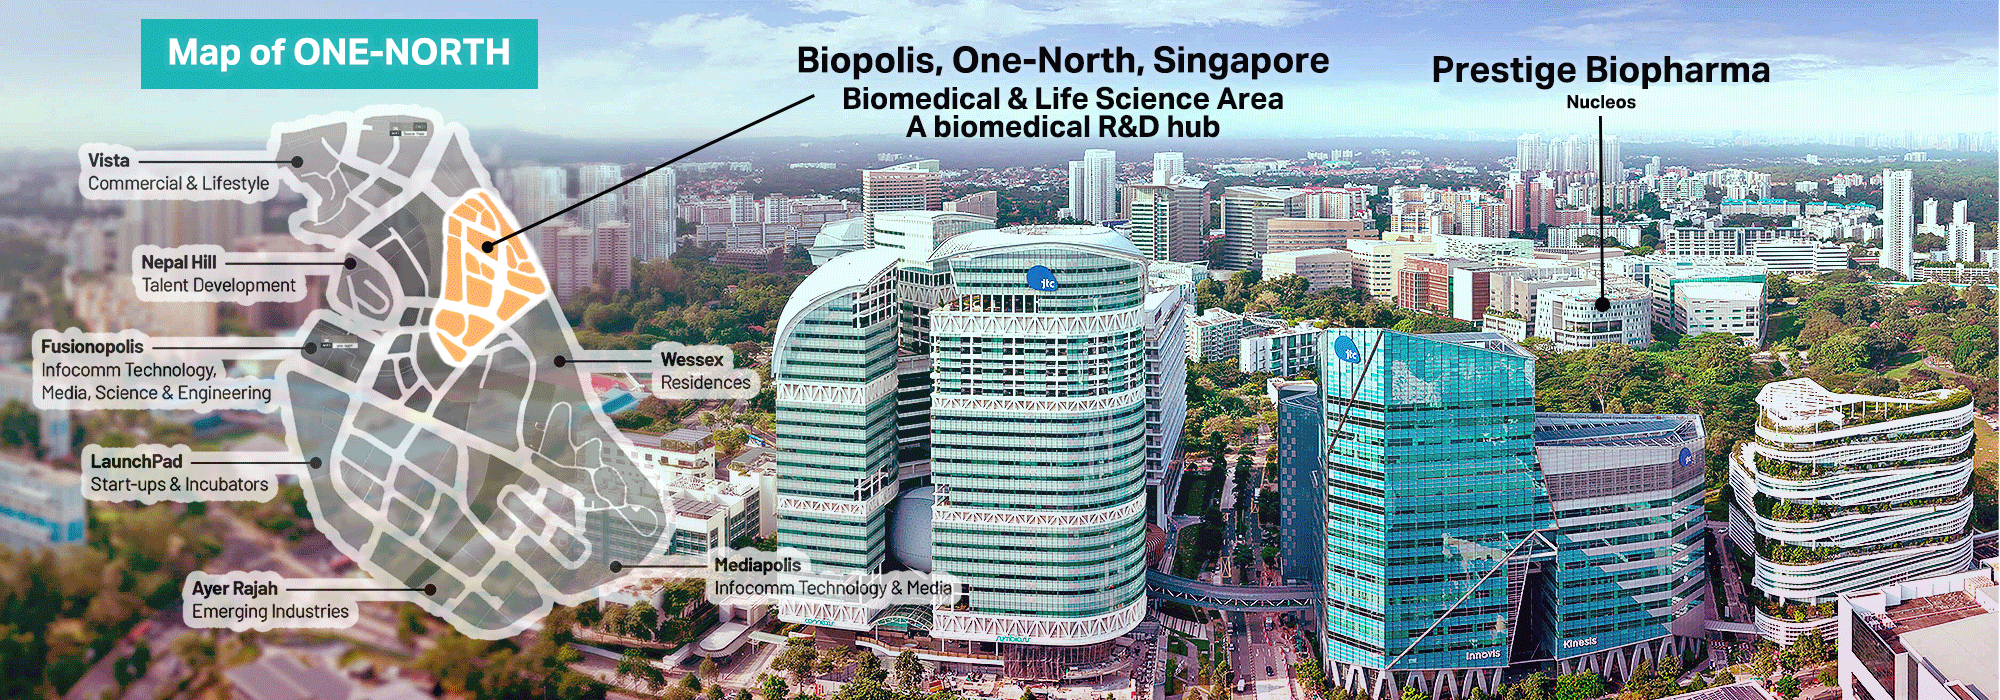 one-north-Nucleos-Prestige-Biopharma-Map-Mobile